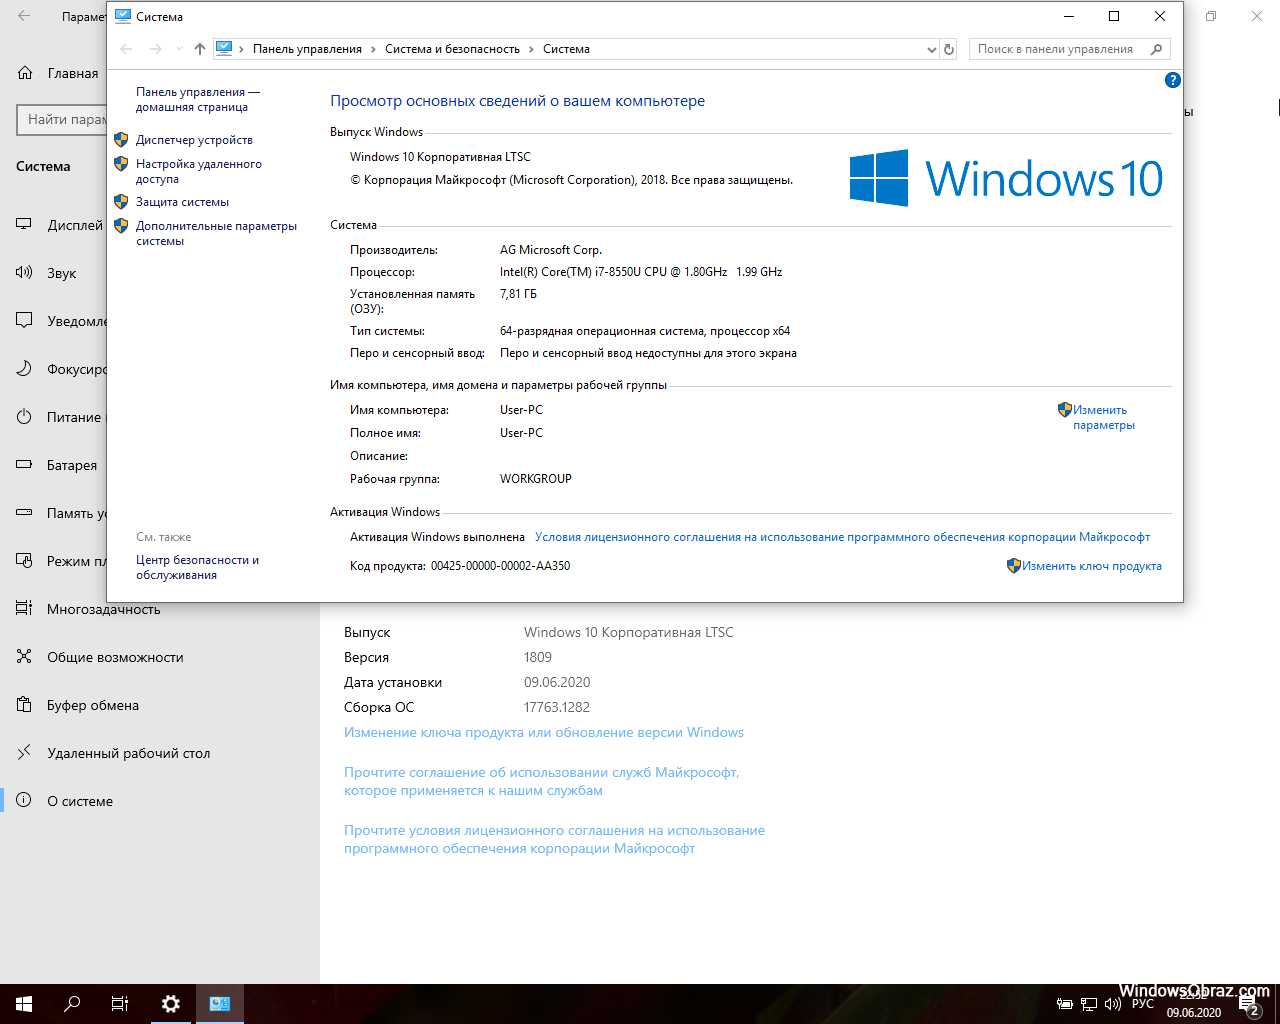 Бесплатная версия win 10 x64. Виндовс 10 корпоративная. 64-Разрядная Операционная система, процессор x64. Версия Windows 10 корпоративная LTSC. Windows 10 Pro.